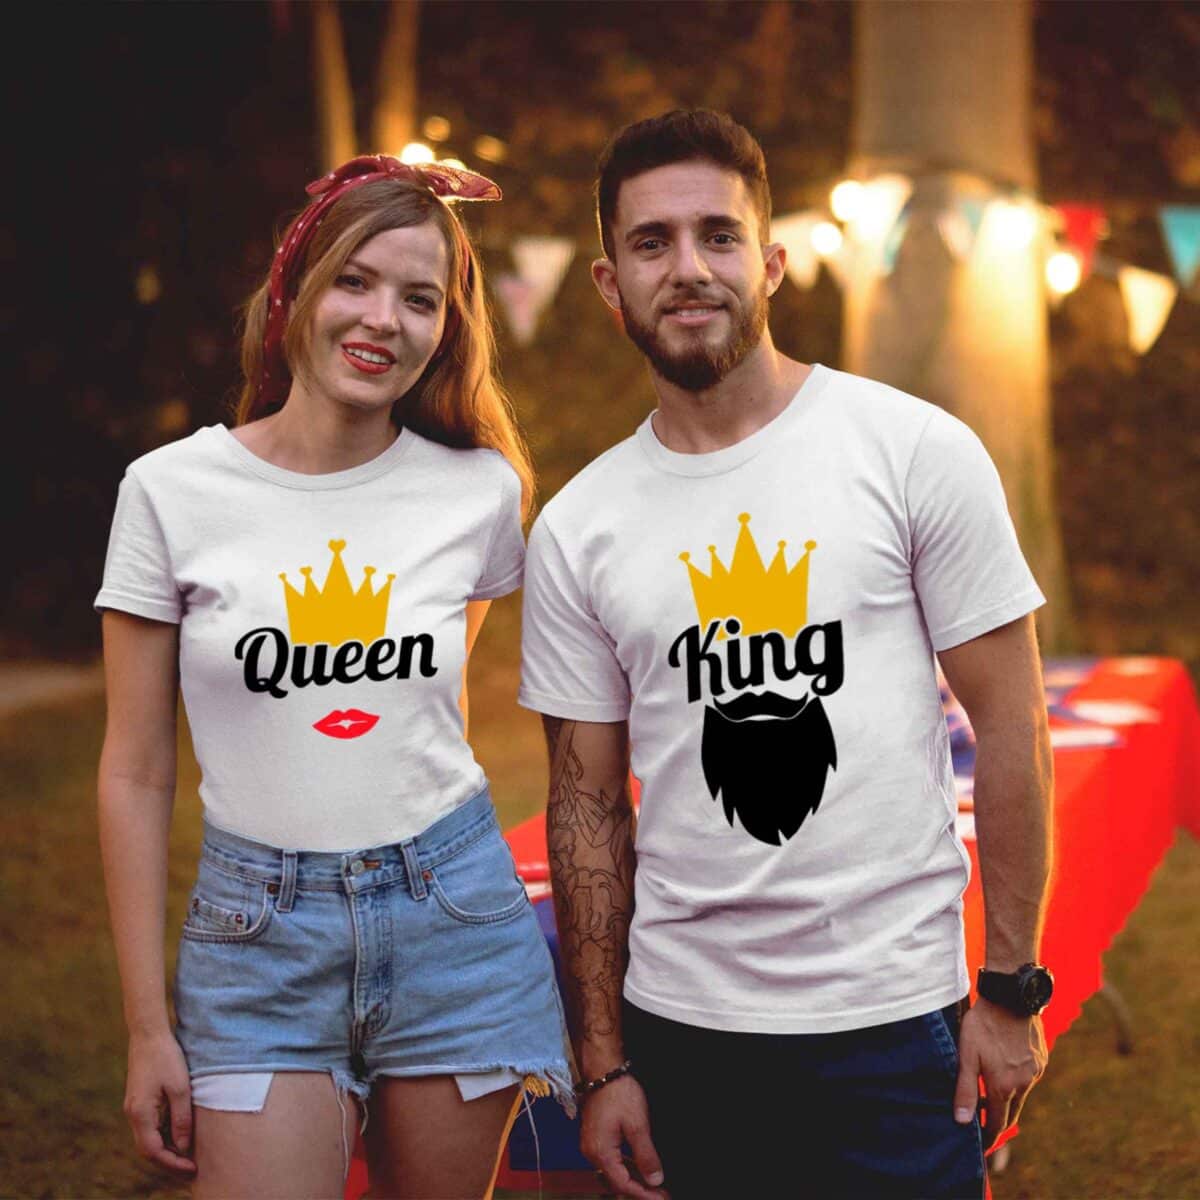 King Queen Couple T-shirts, Matching T-shirts